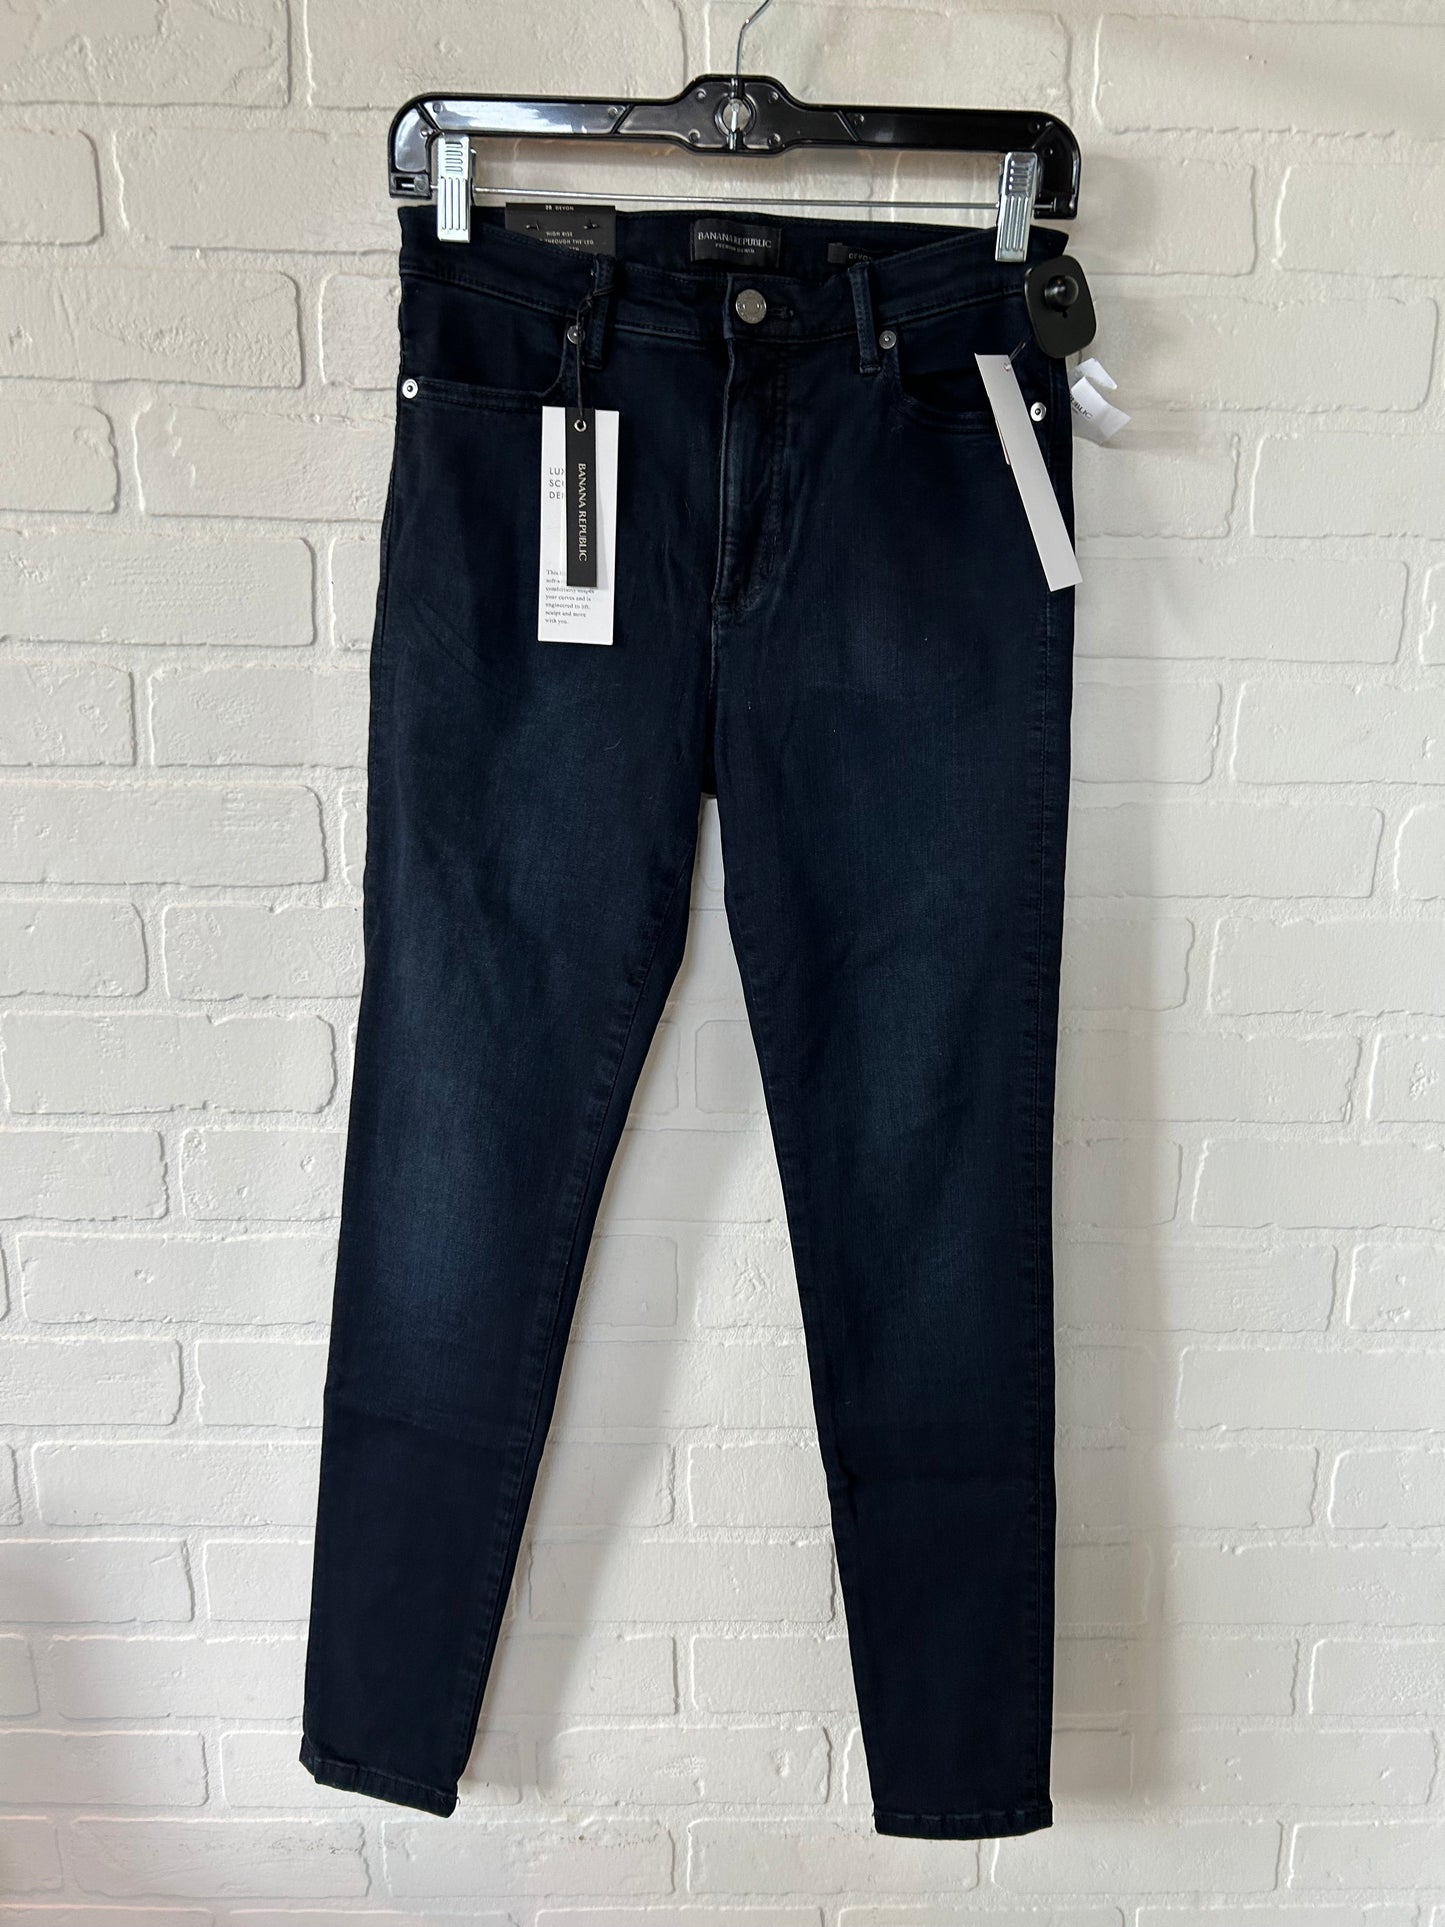 Blue Denim Jeans Skinny Banana Republic, Size 6